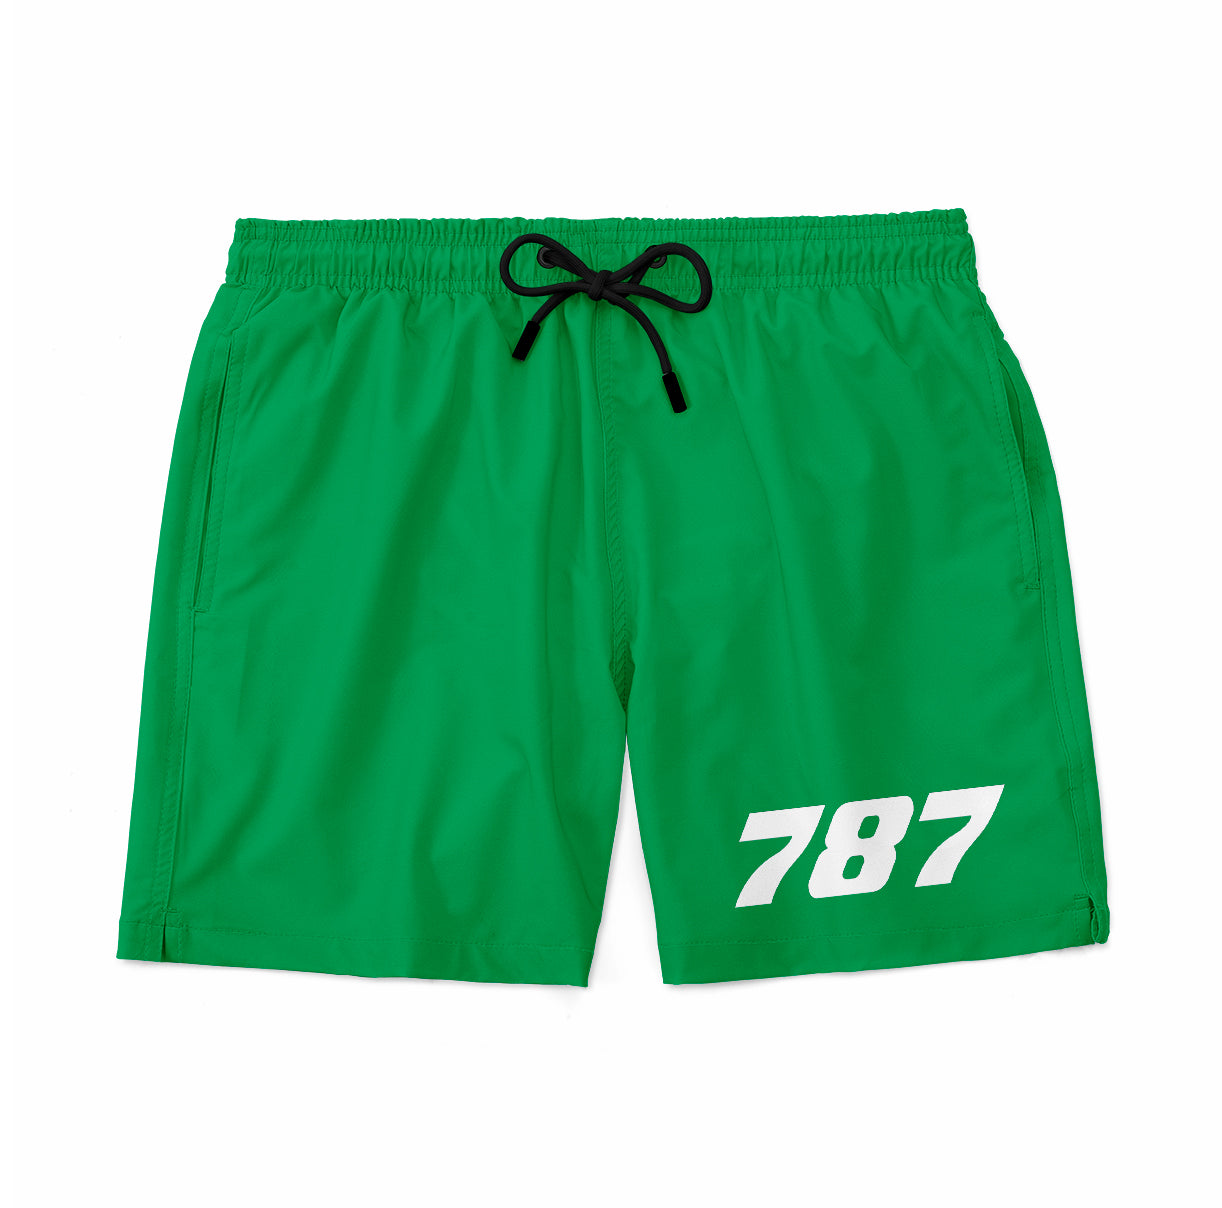 787 Flat Text Designed Swim Trunks & Shorts